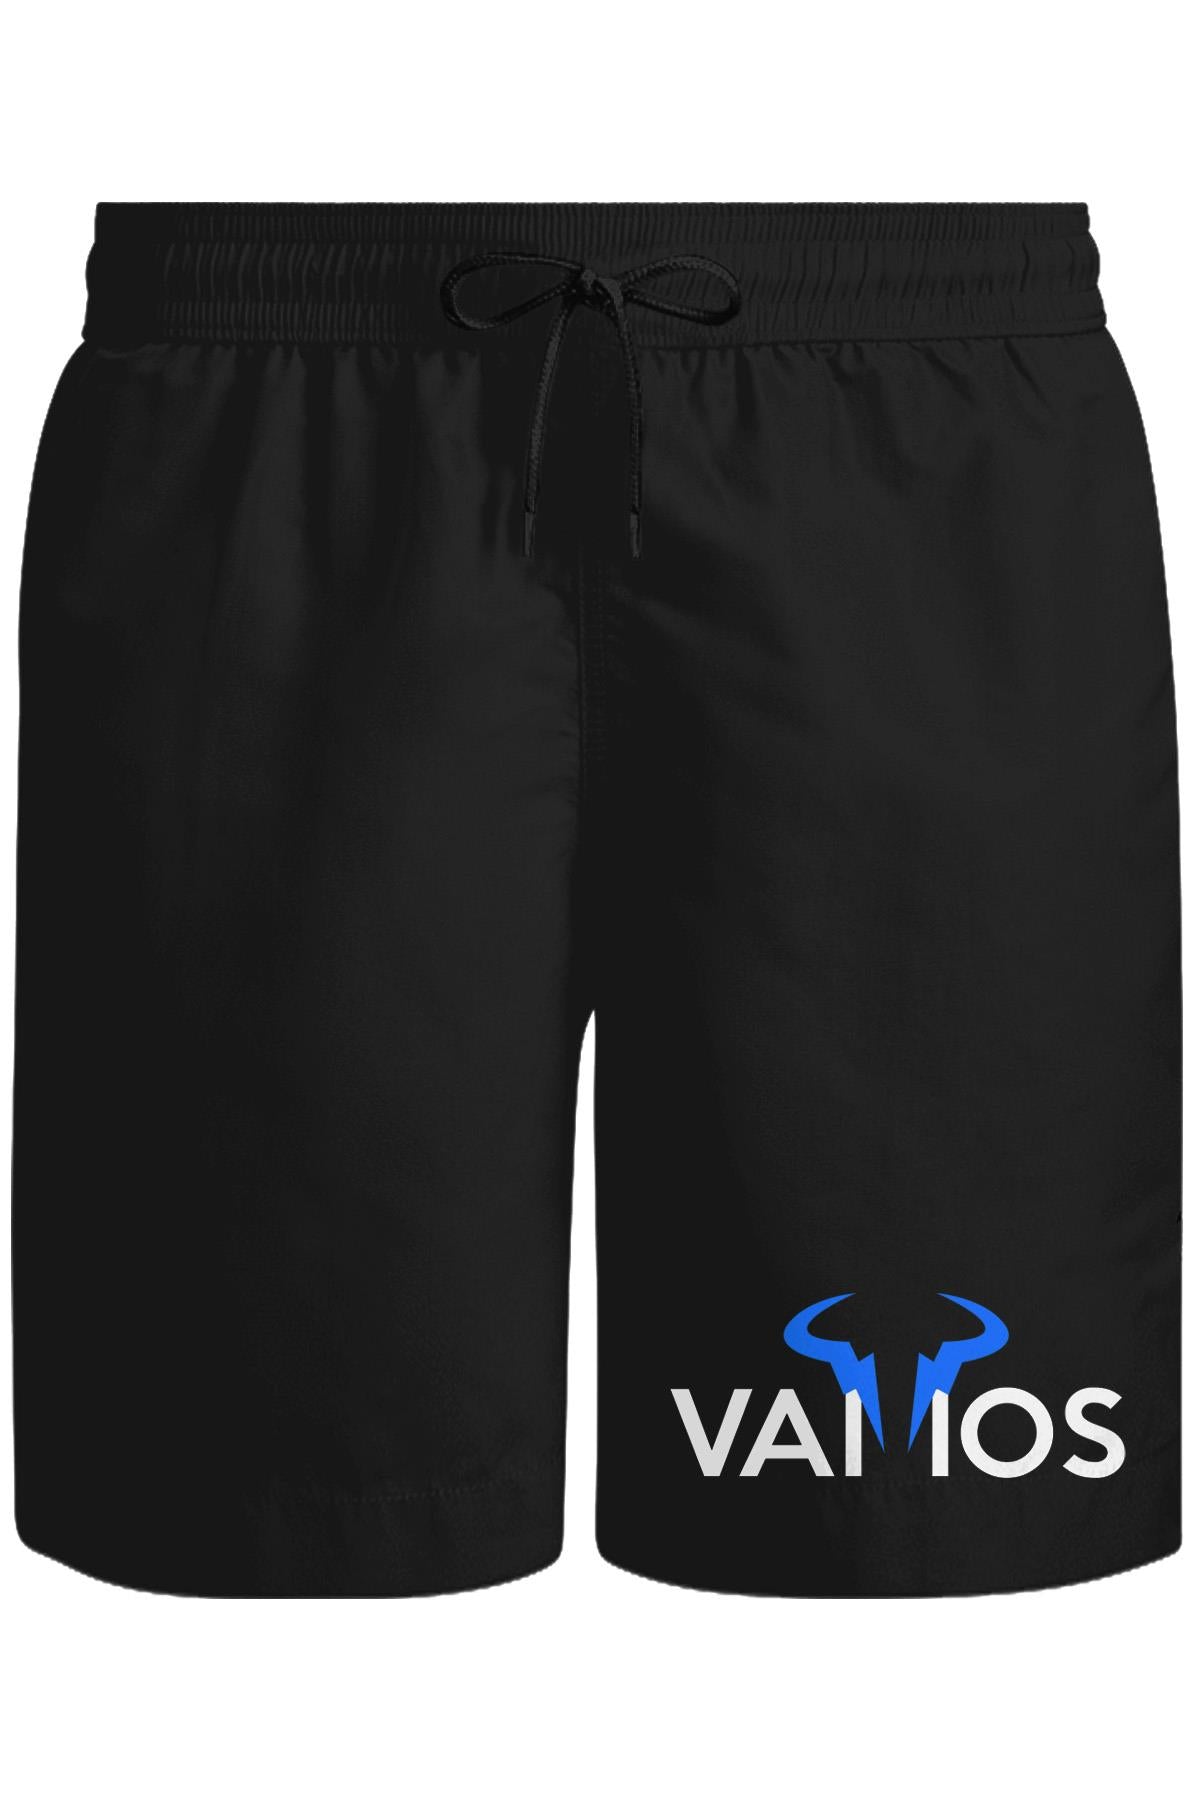 Tennis - Vamos Unisex Black Shorts